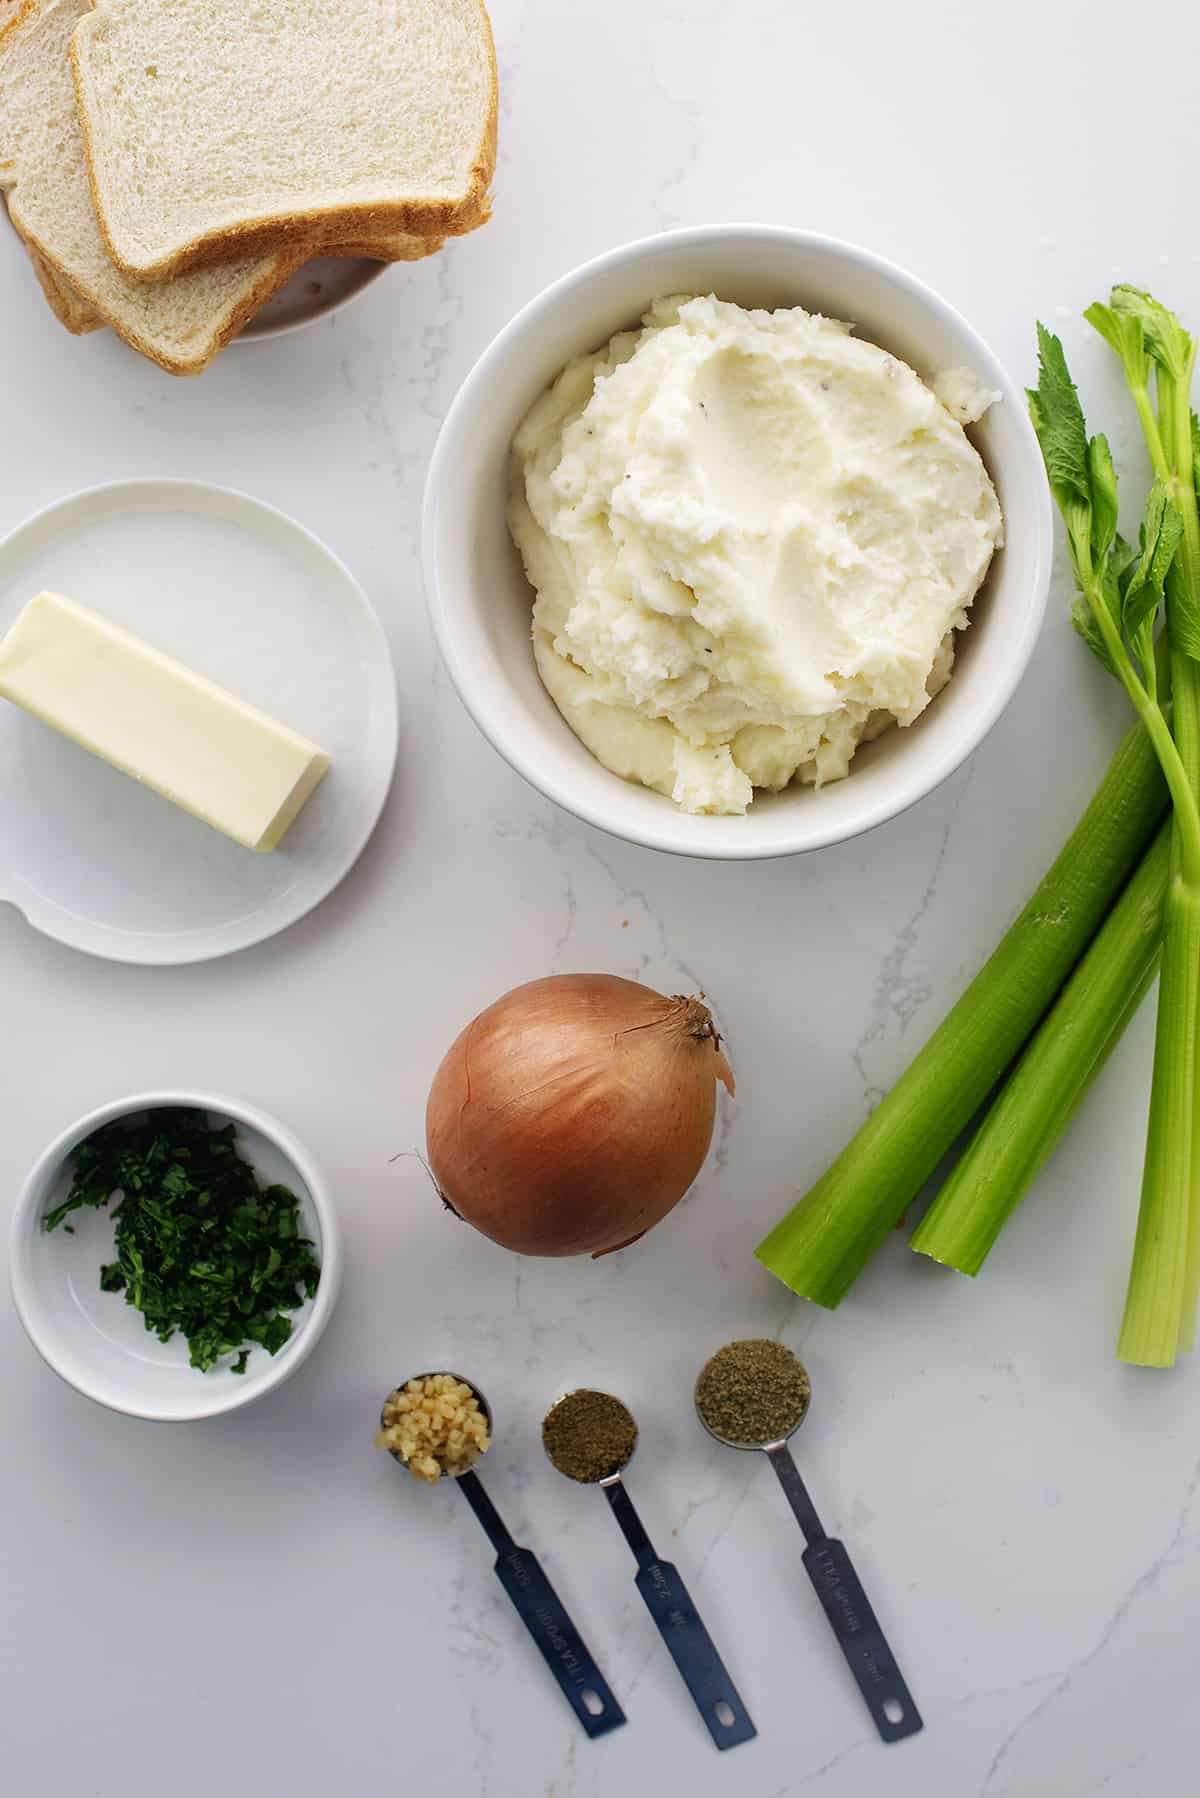 Ingredients for mashed potato stuffing.